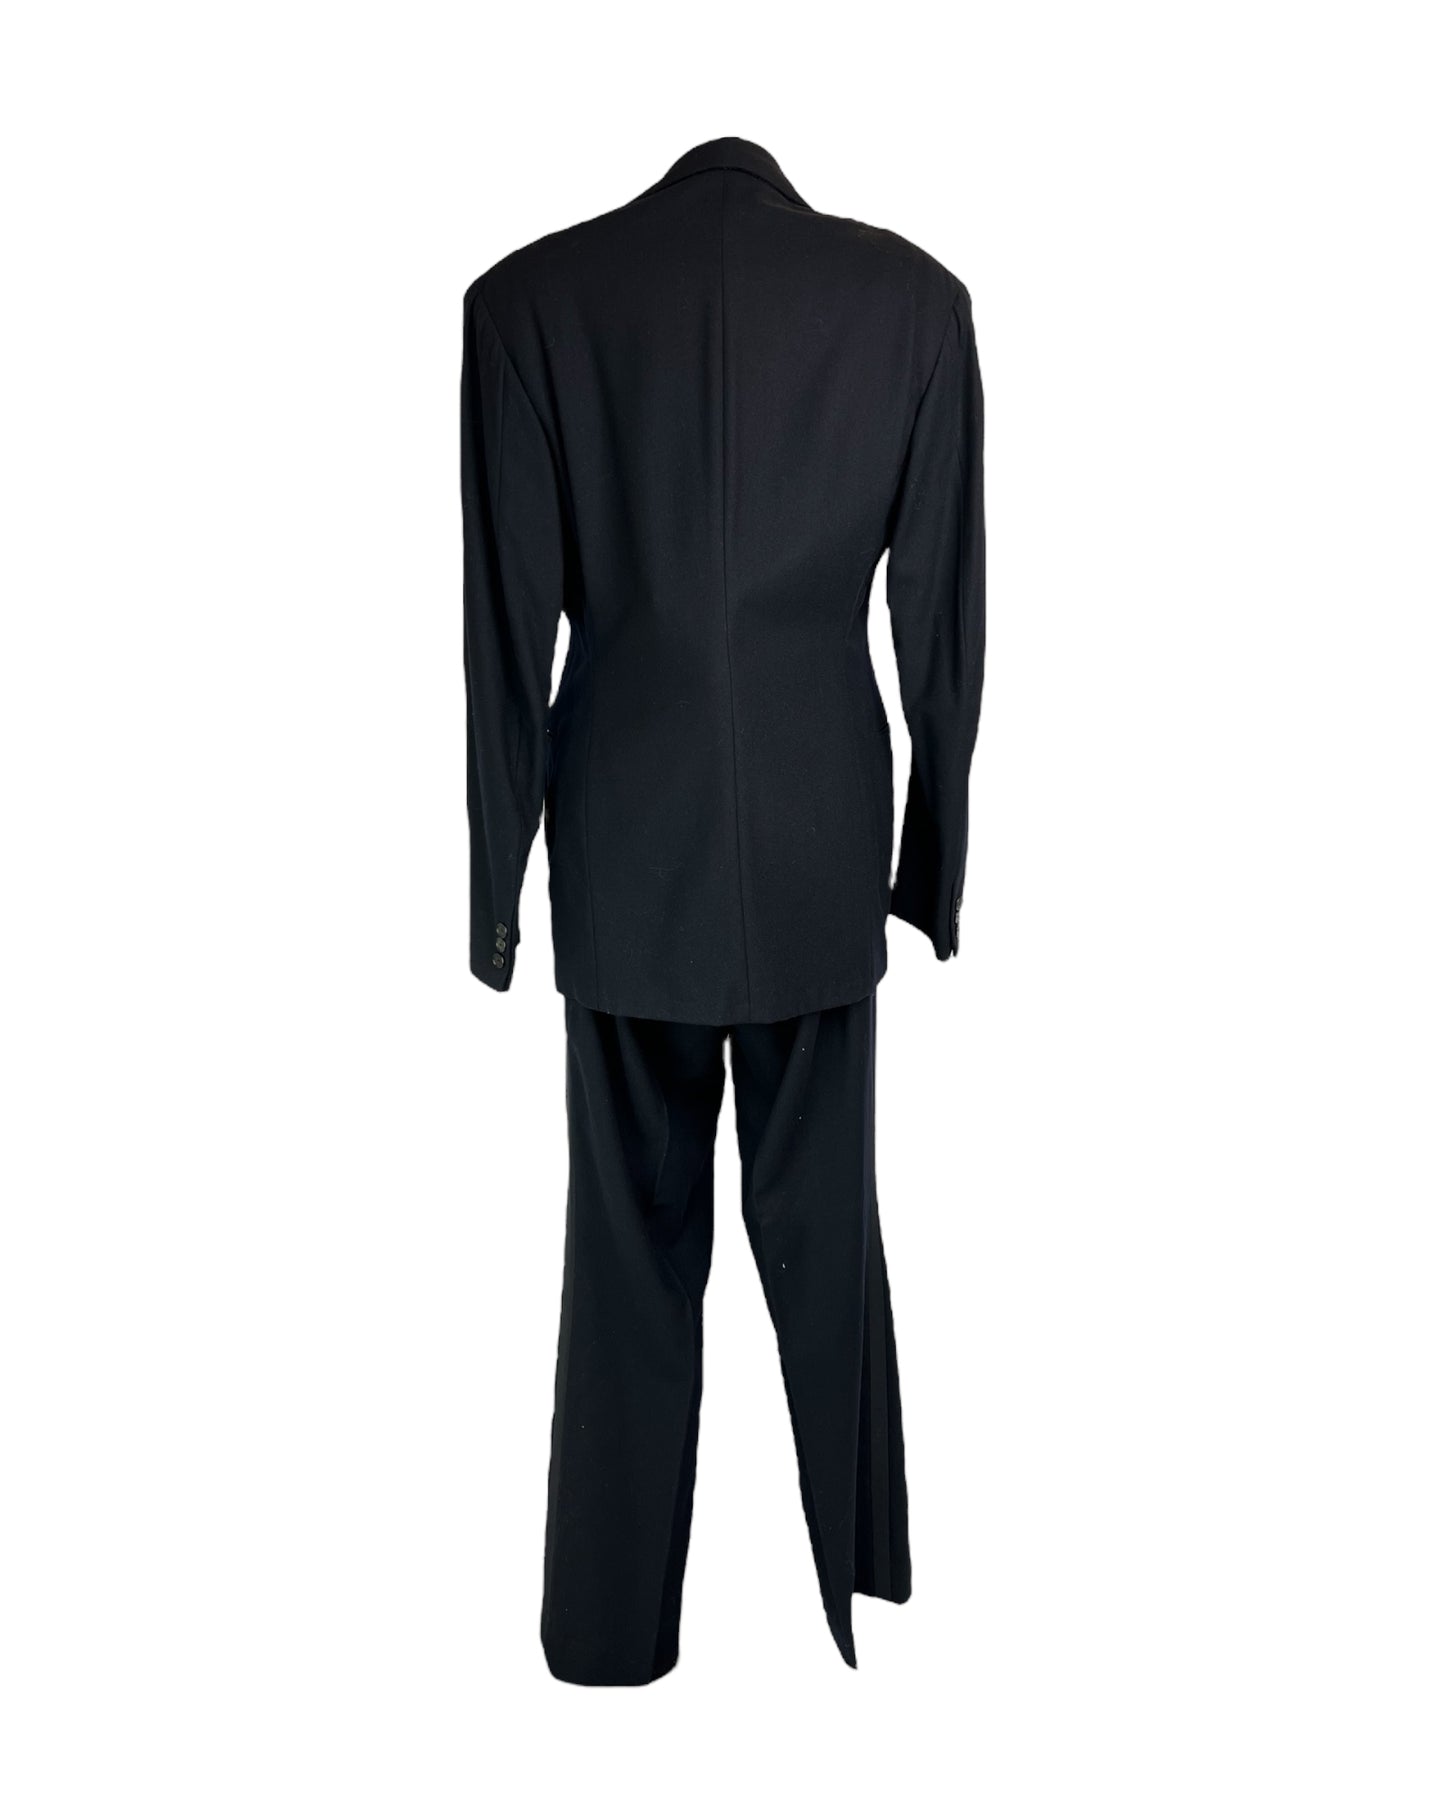 1930s Classic Black Wool Suit